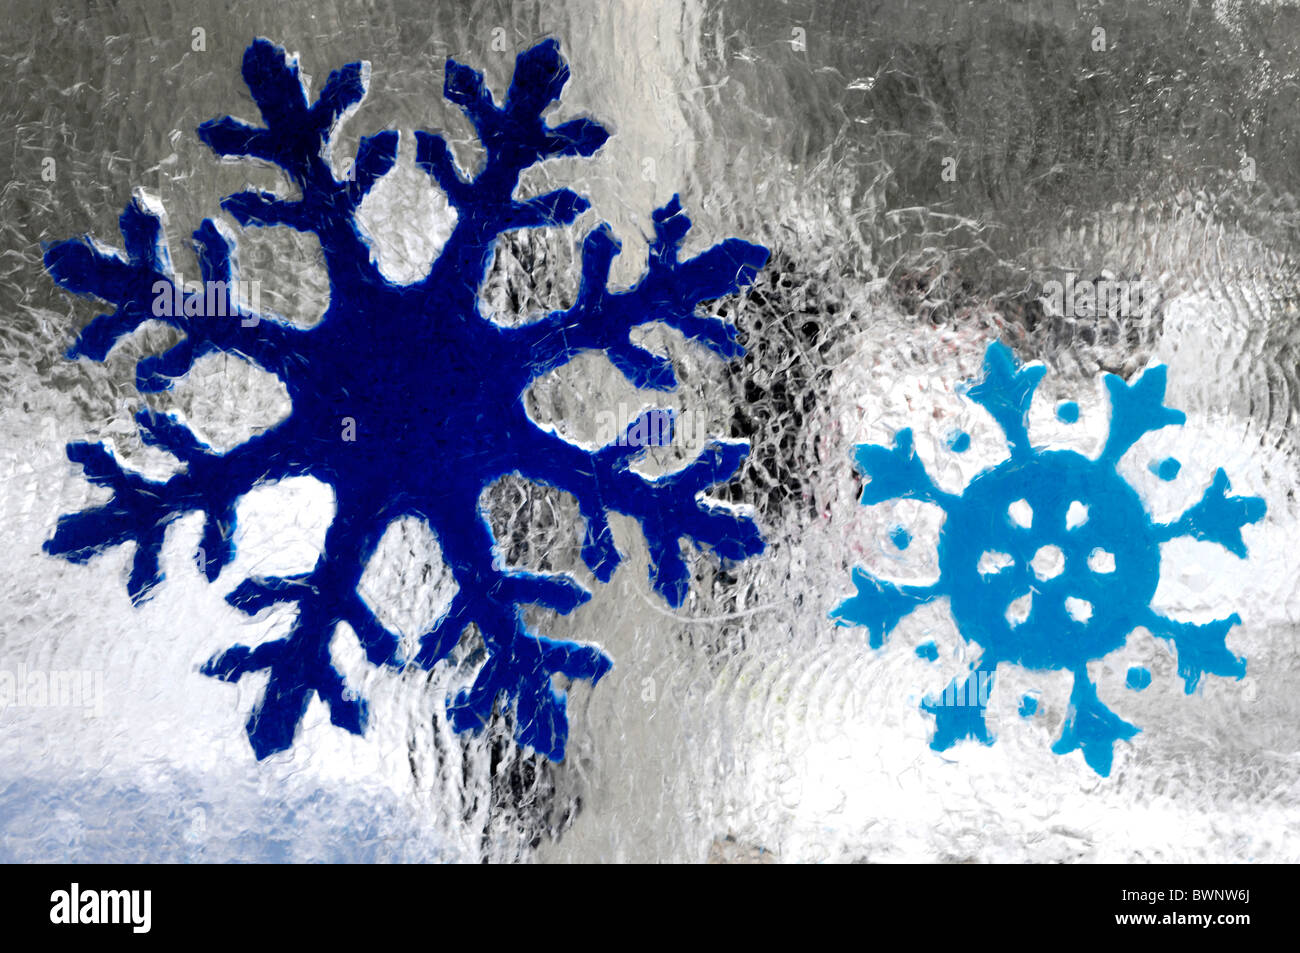 Snowflakes frozen in ice blocks Stock Photo